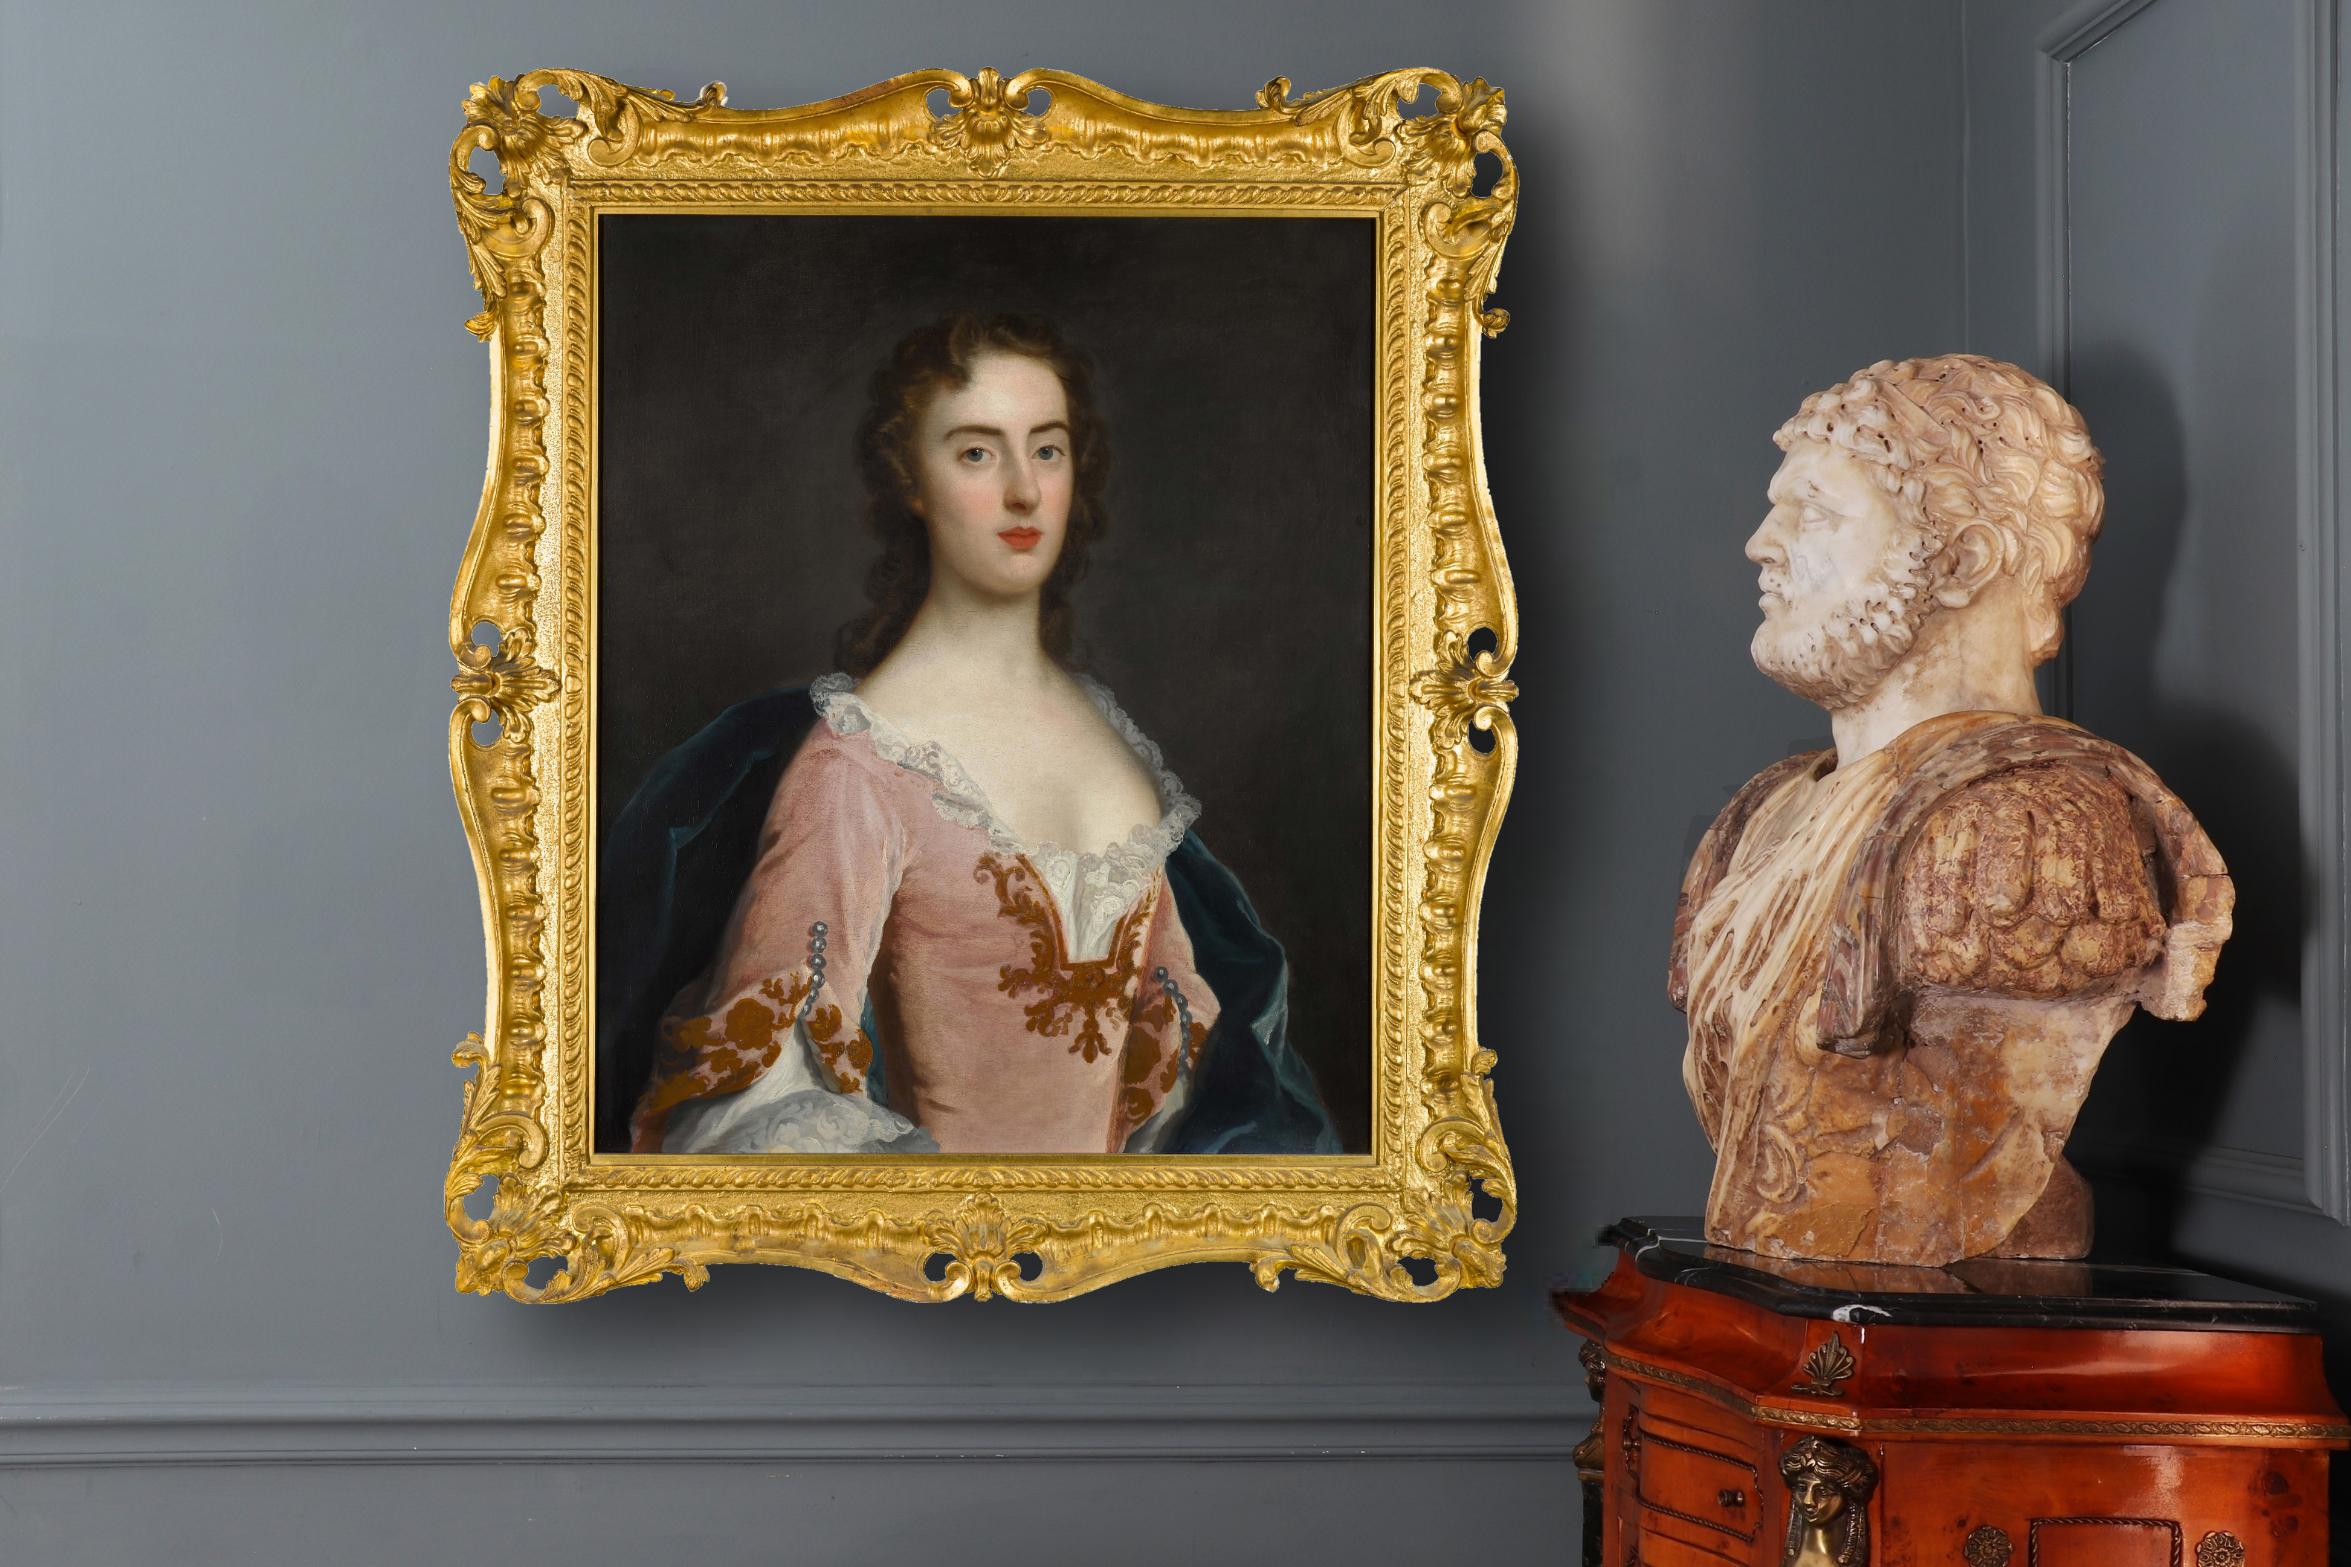 18th century english portraitist